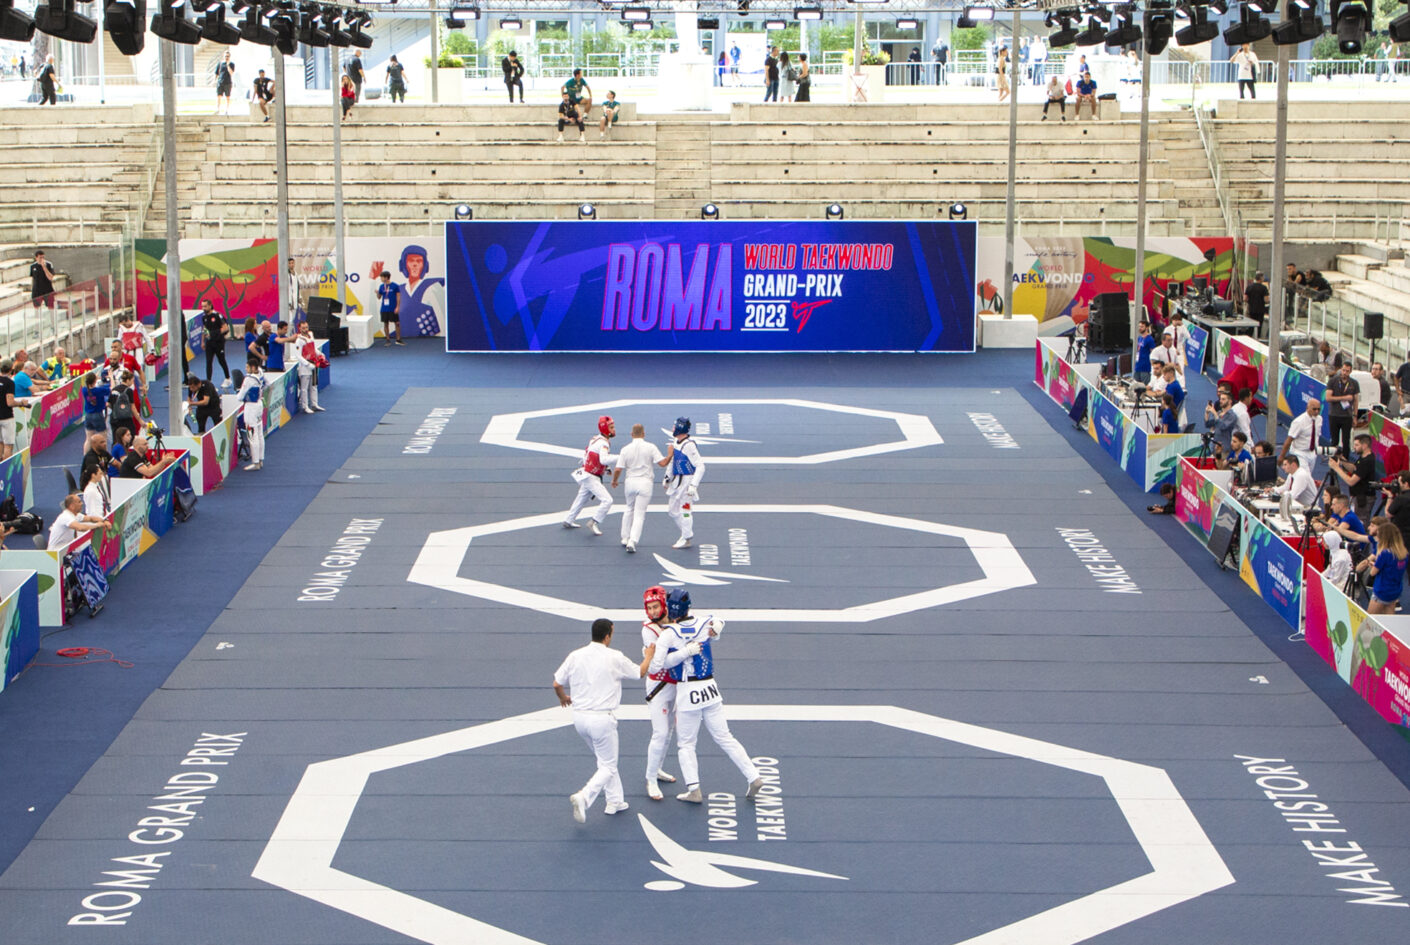 World Taekwondo Roma Grand Prix 2023